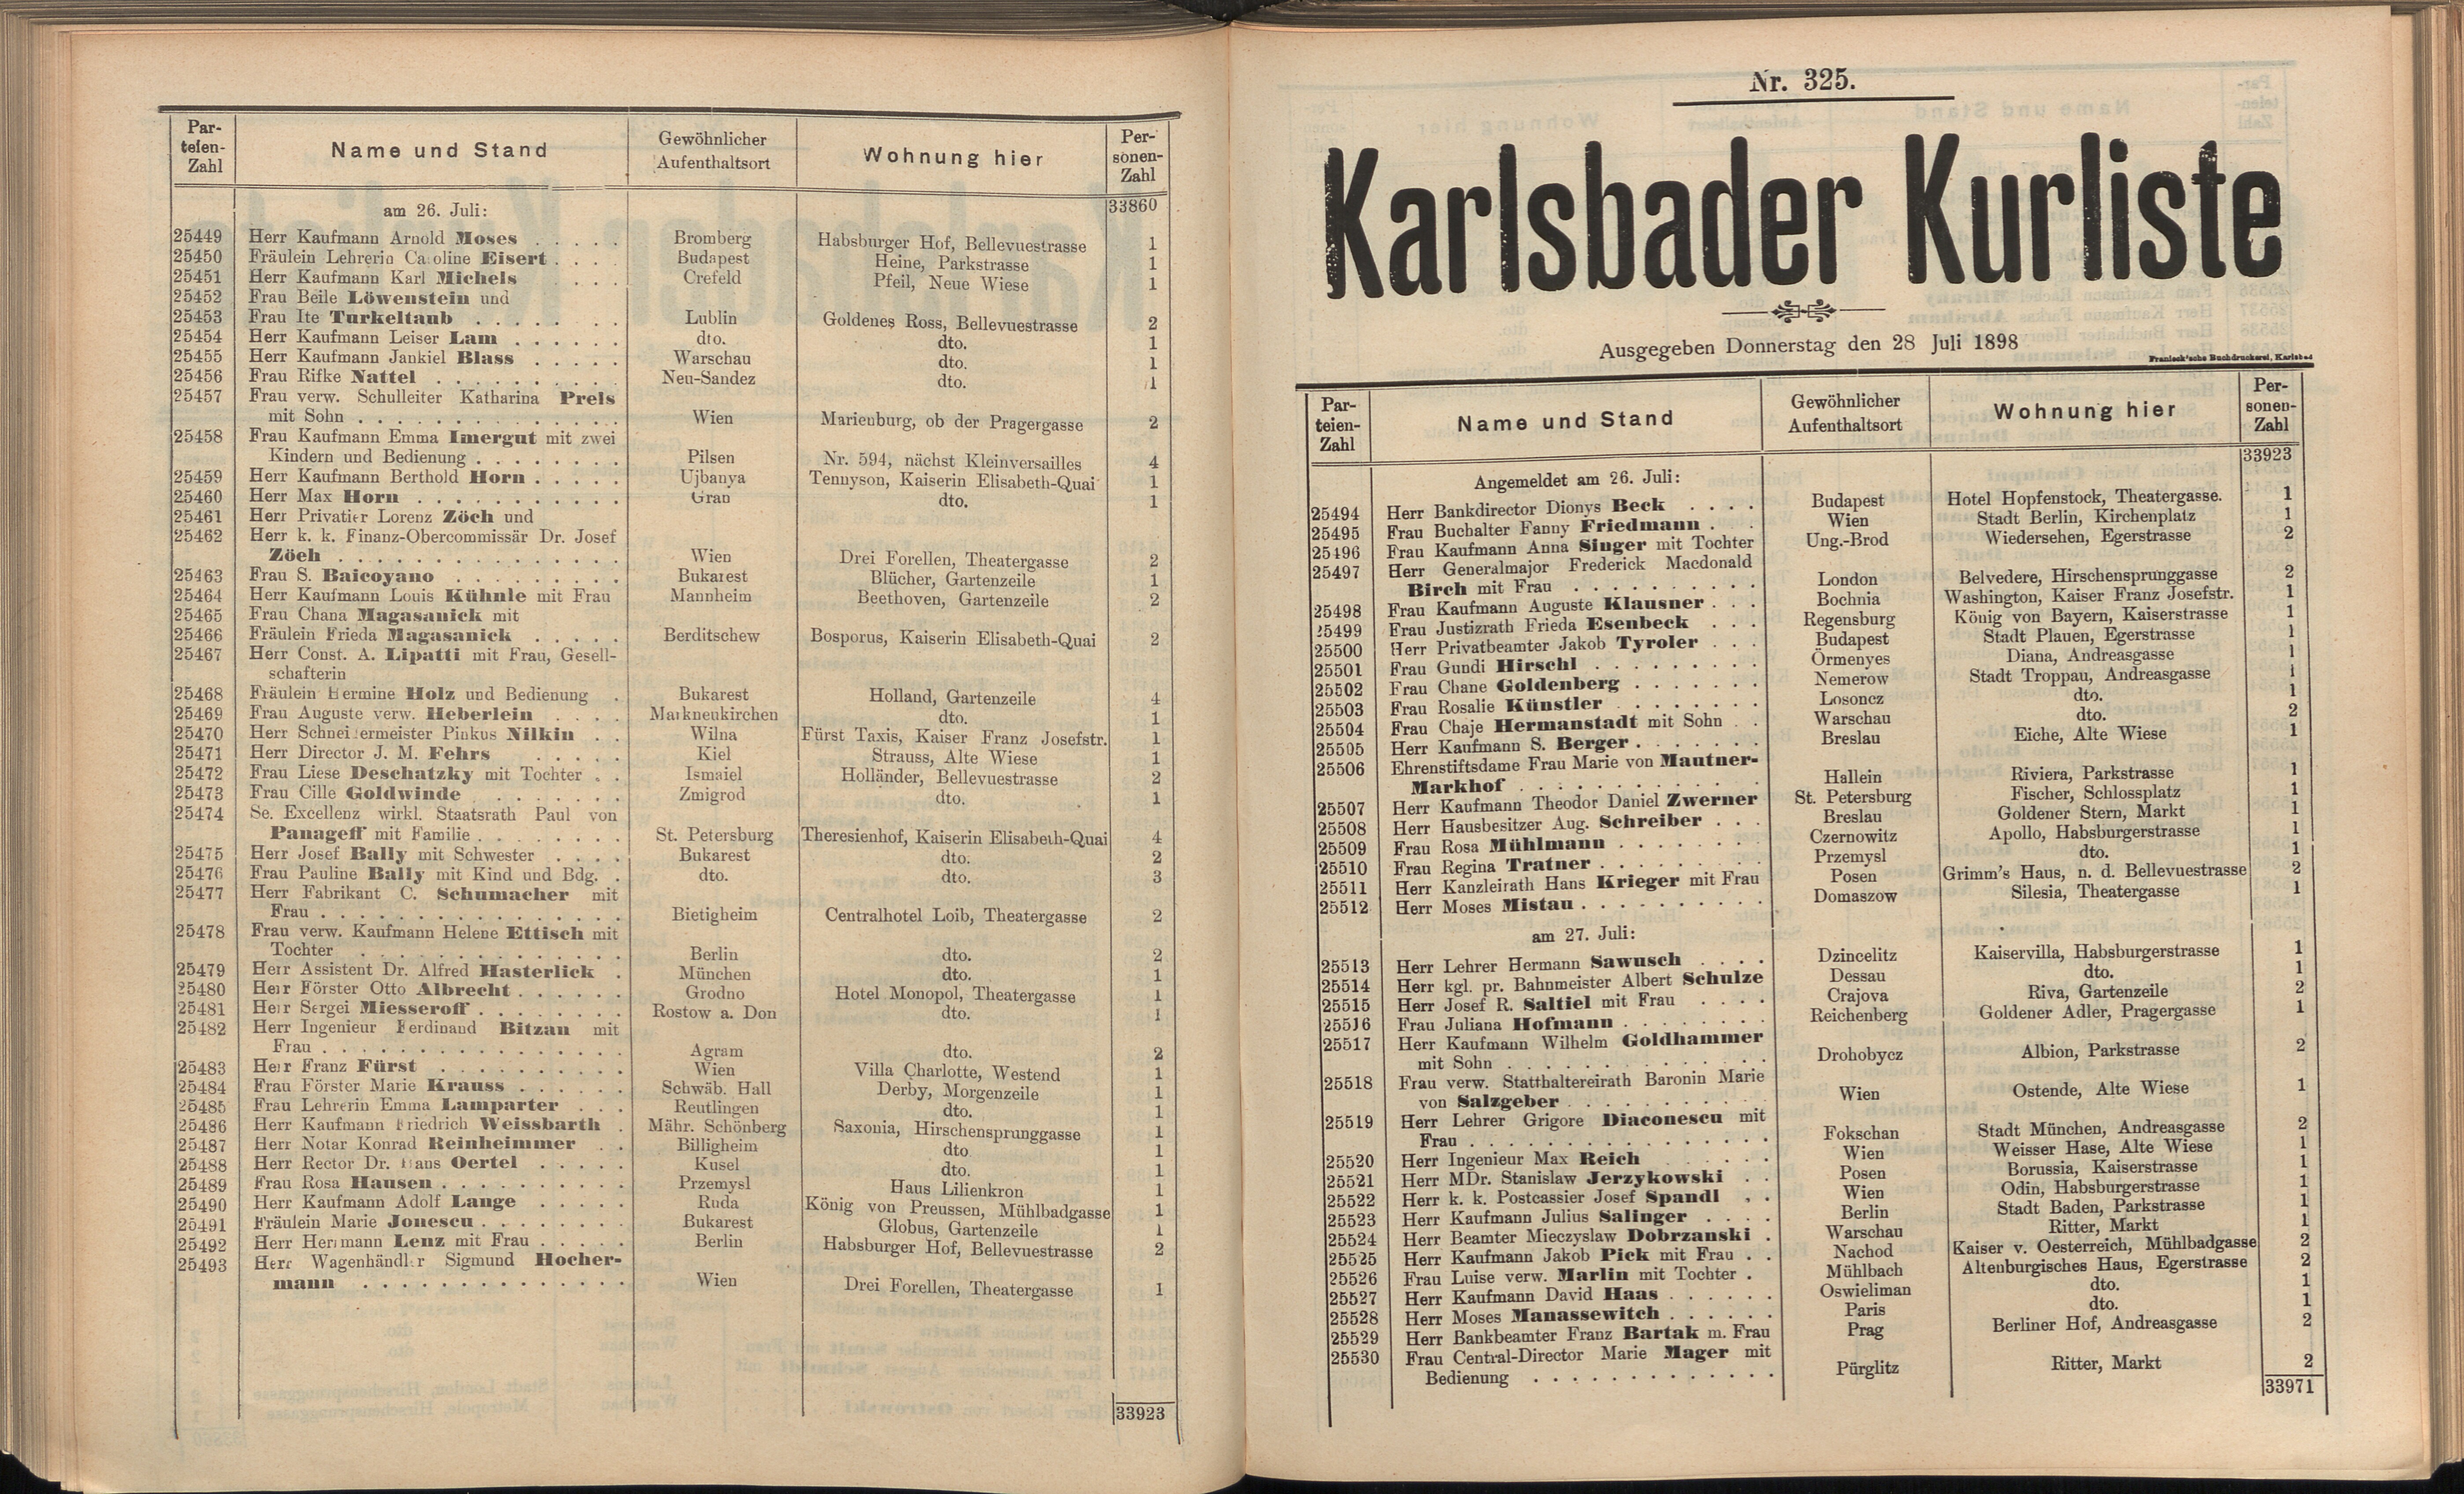 341. soap-kv_knihovna_karlsbader-kurliste-1898_3420